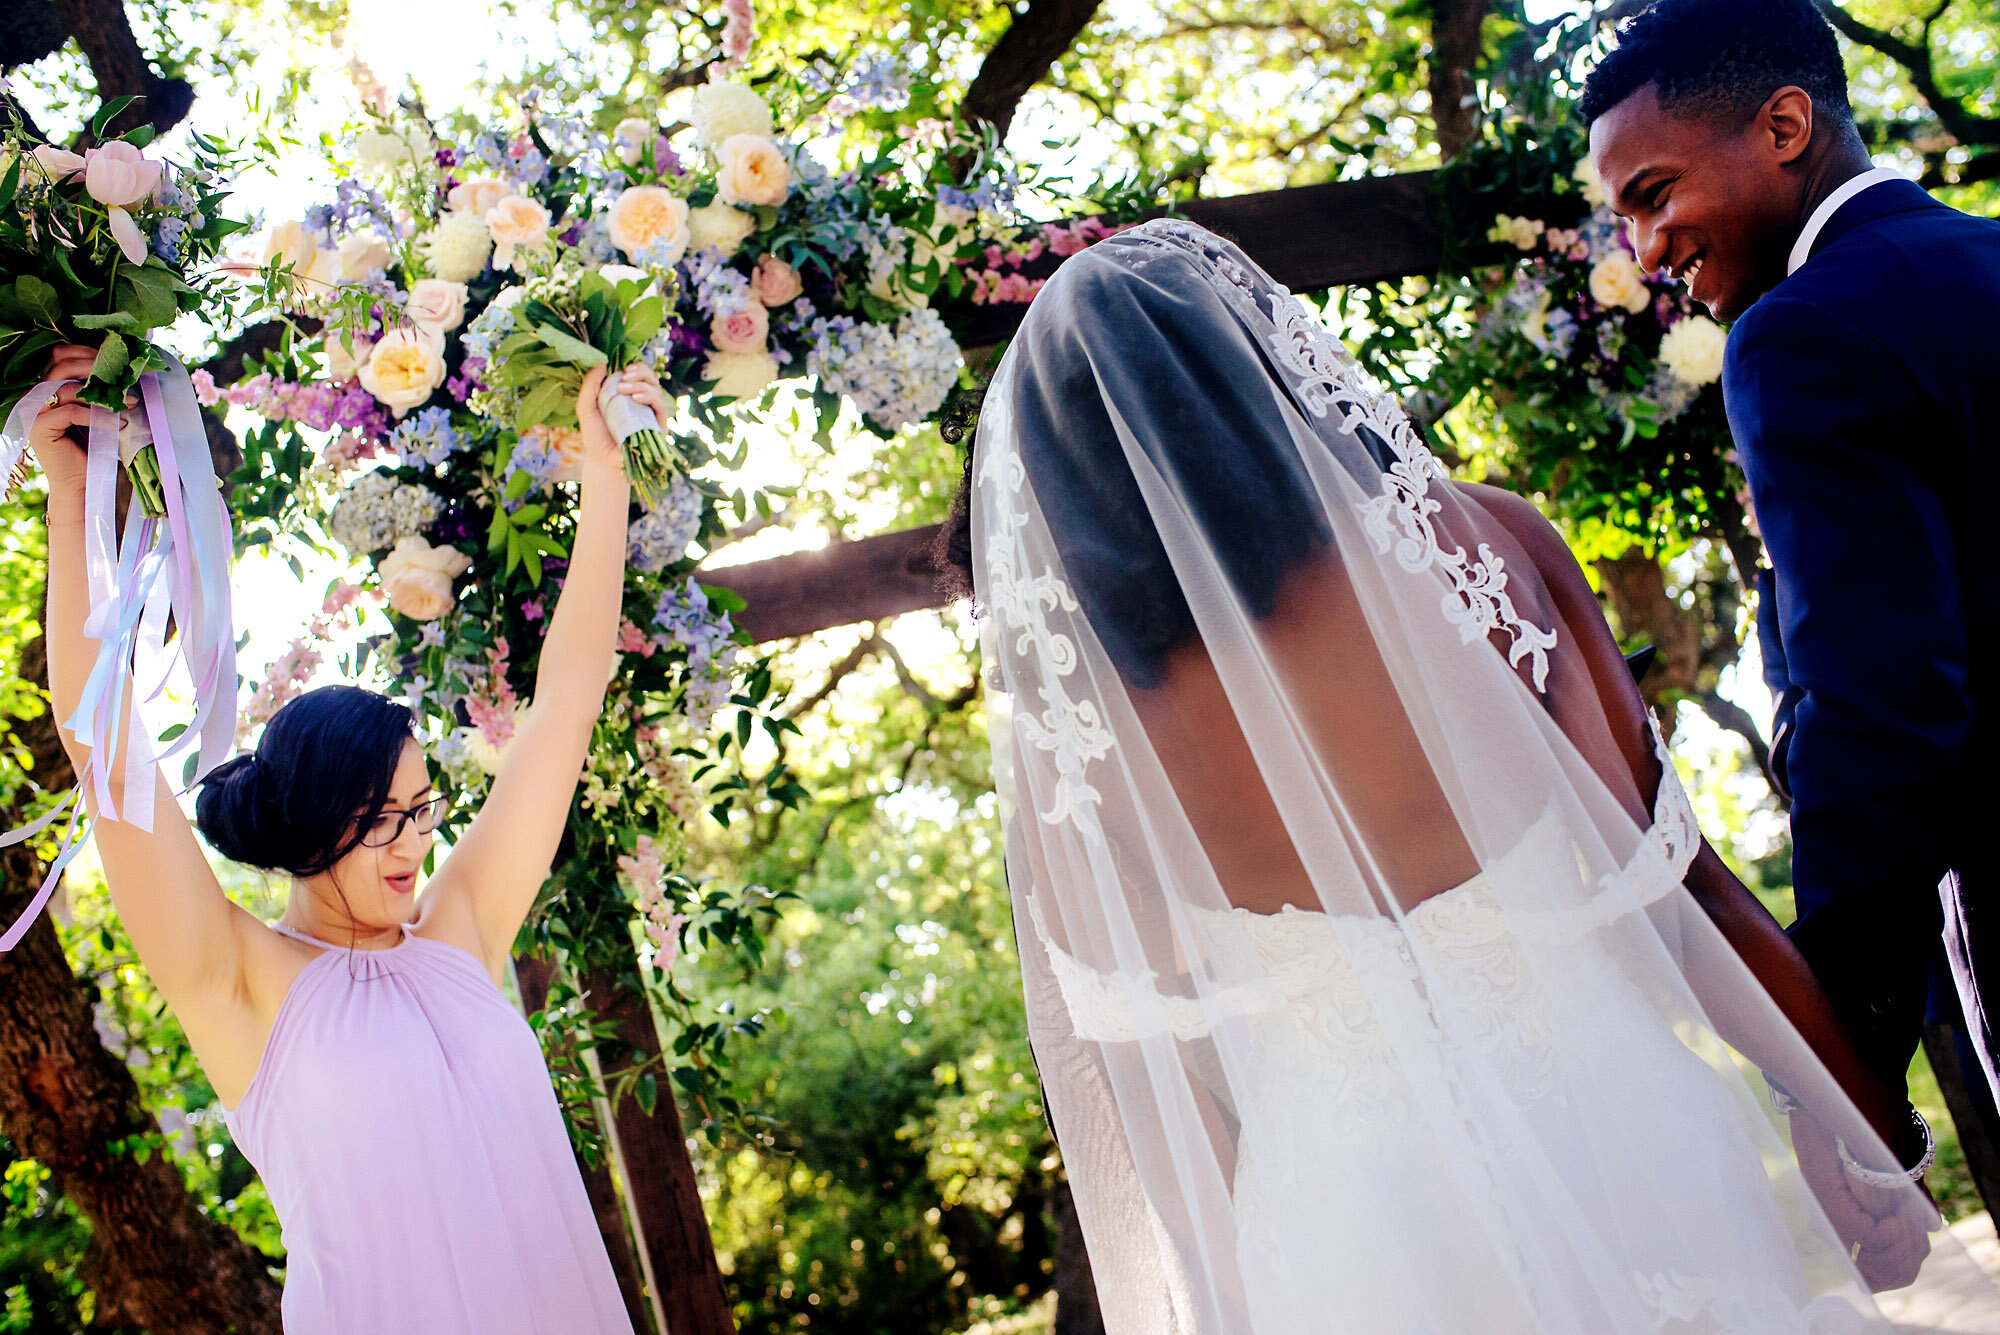 31-Austin-wedding-photographer-Jide-Alakija-maid of honor has hand ups as couple have been pronounced.jpg.JPG